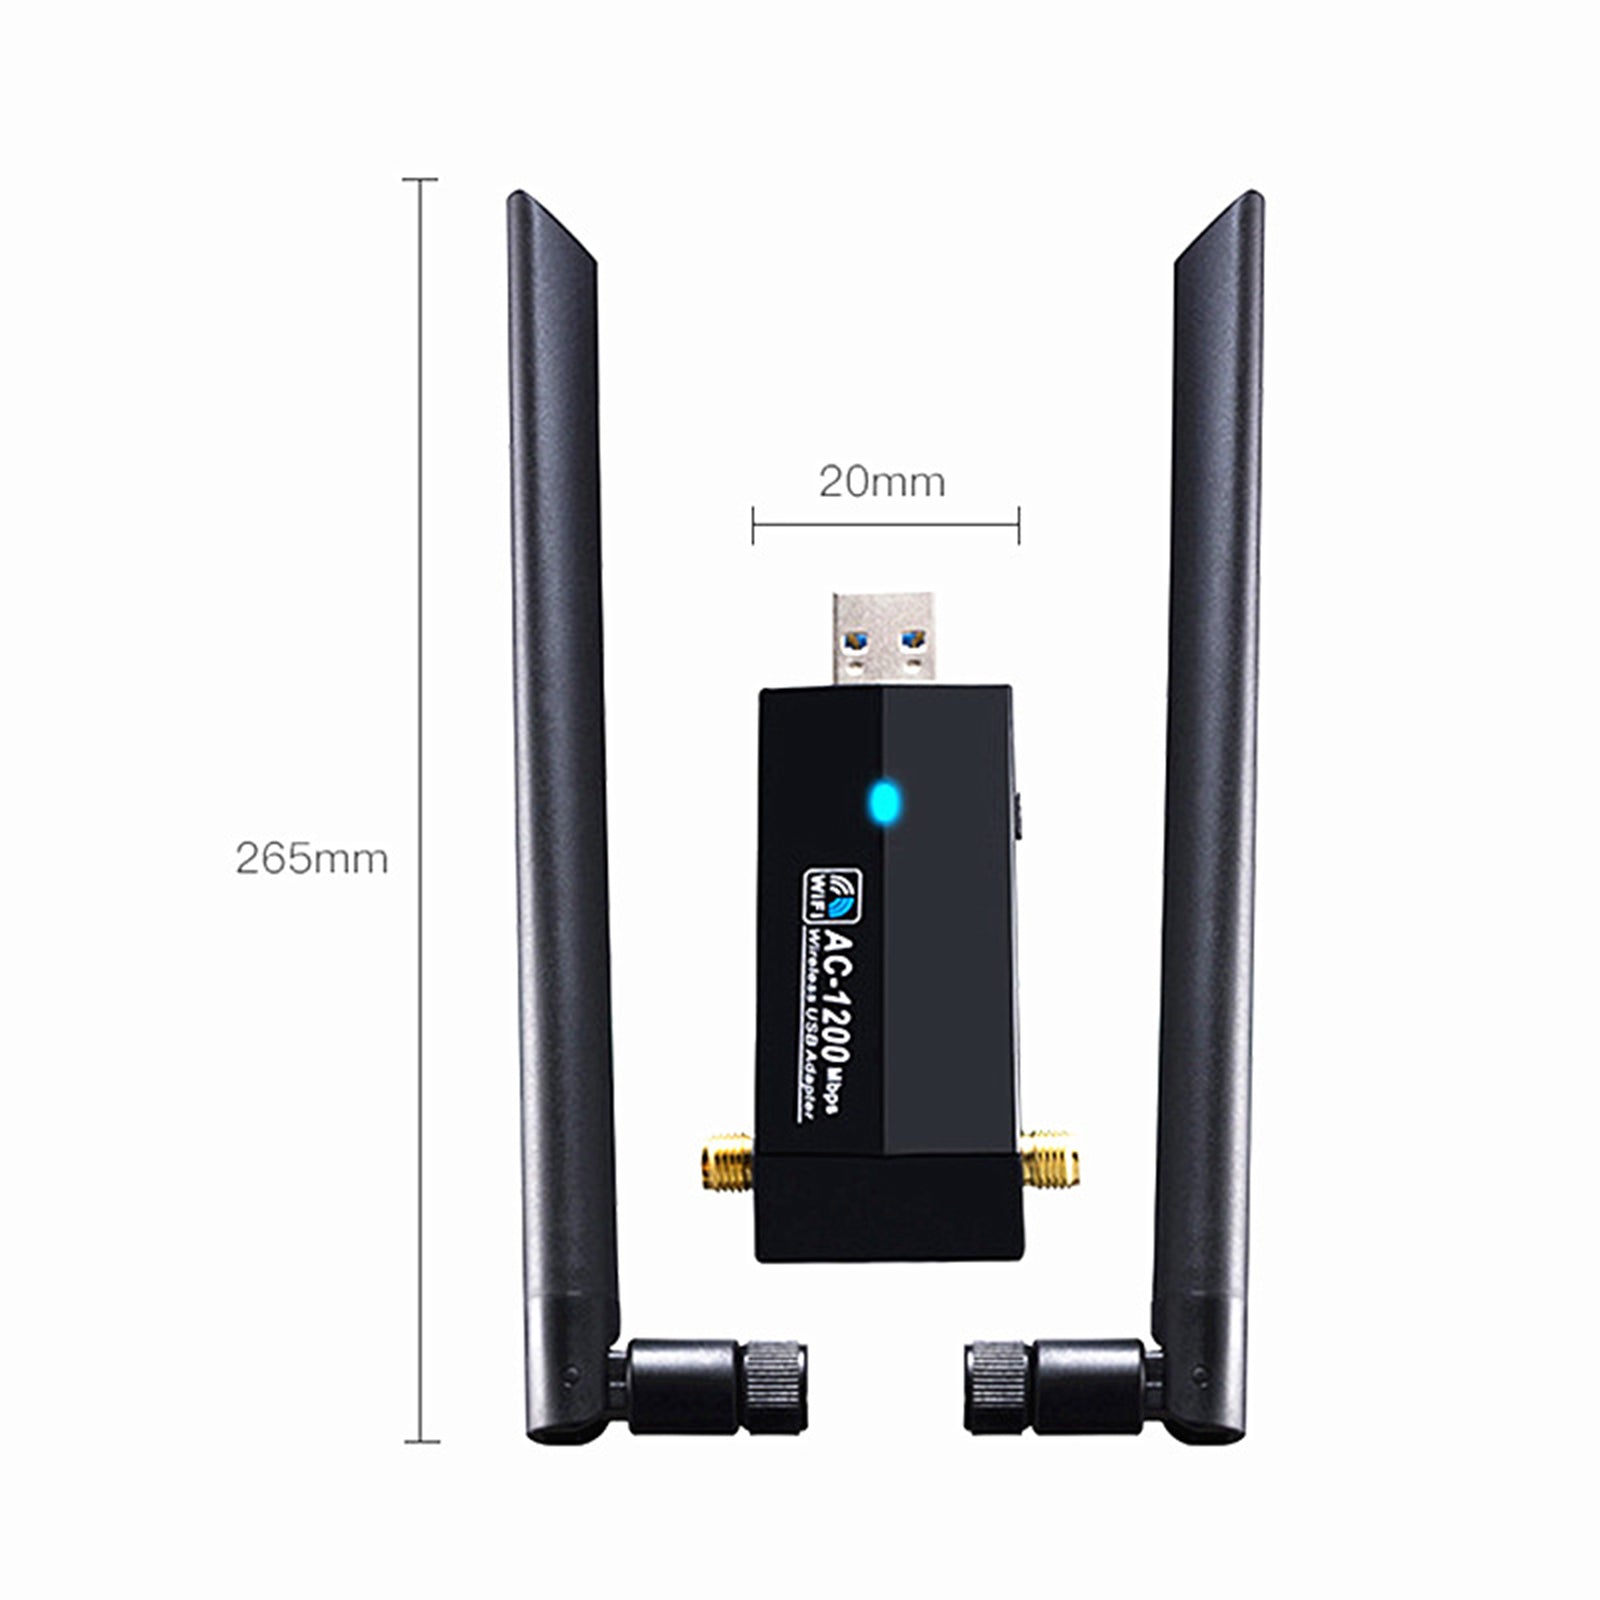 USB 3.0 1200Mbps Long Range AC1200 2.4G/5G Wireless WiFi Adapter w/Antenna